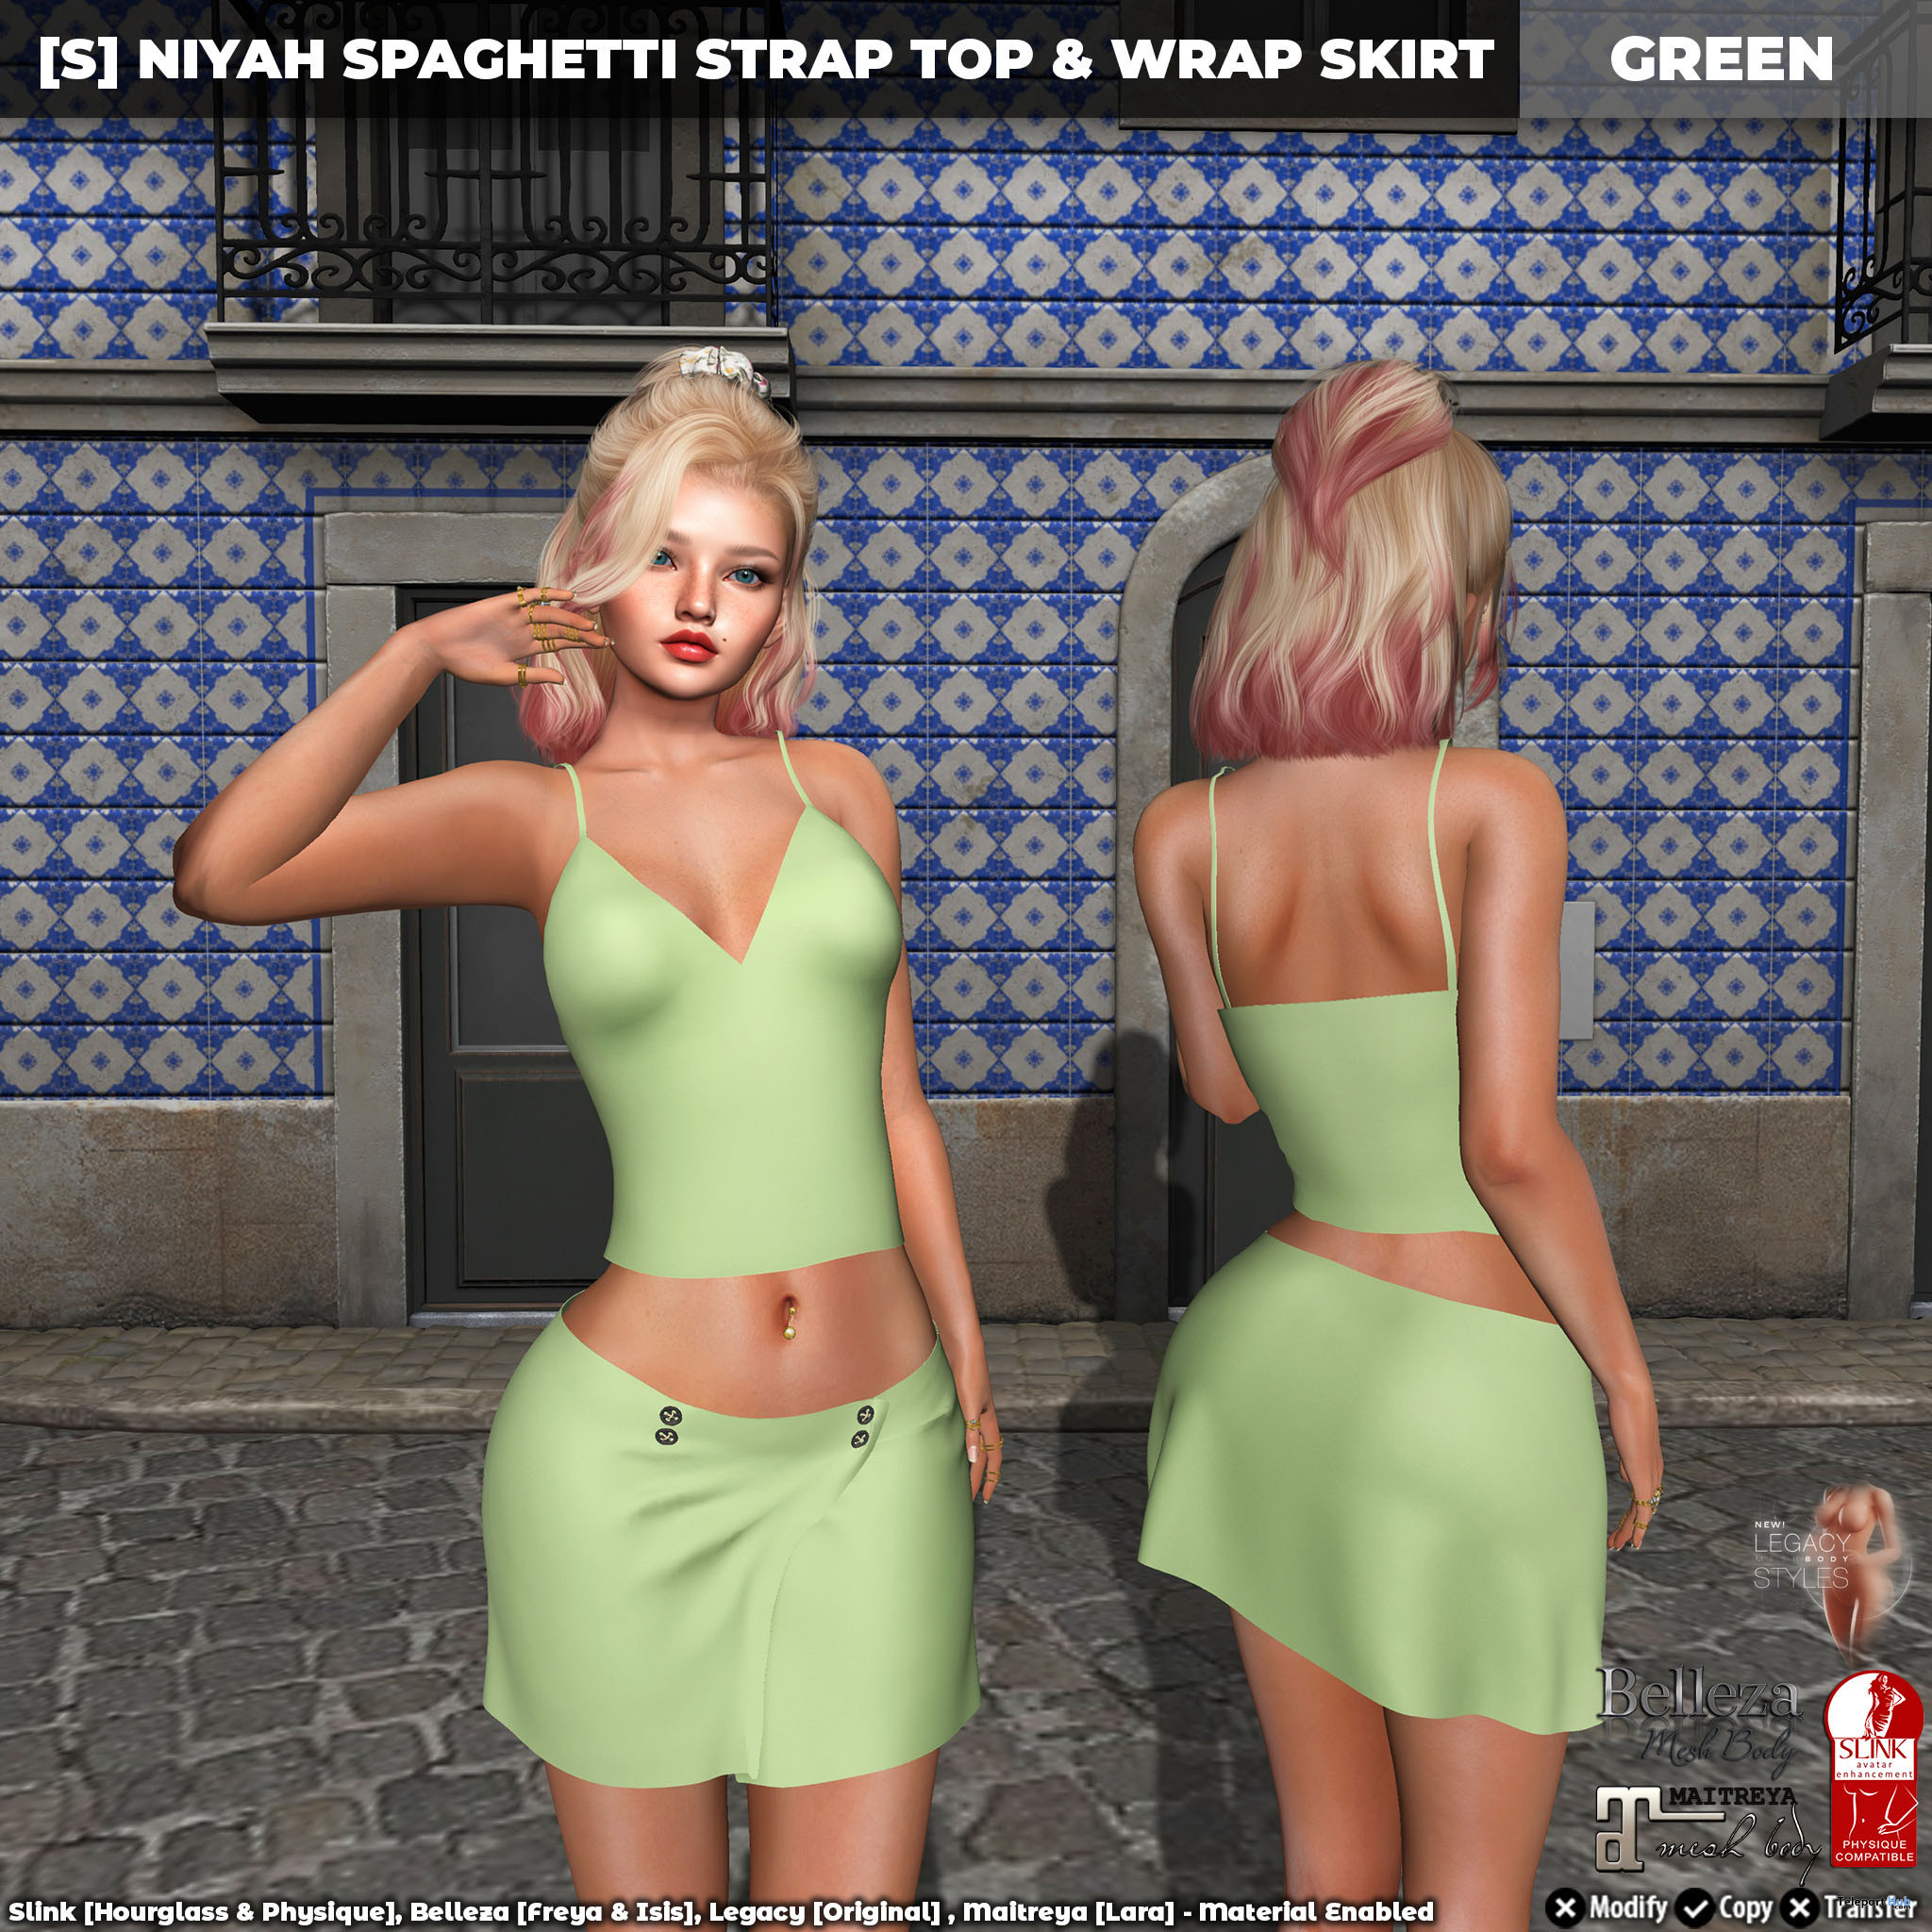 New Release: [S] Niyah Spaghetti Strap Top & Wrap Skirt by [satus Inc] - Teleport Hub - teleporthub.com